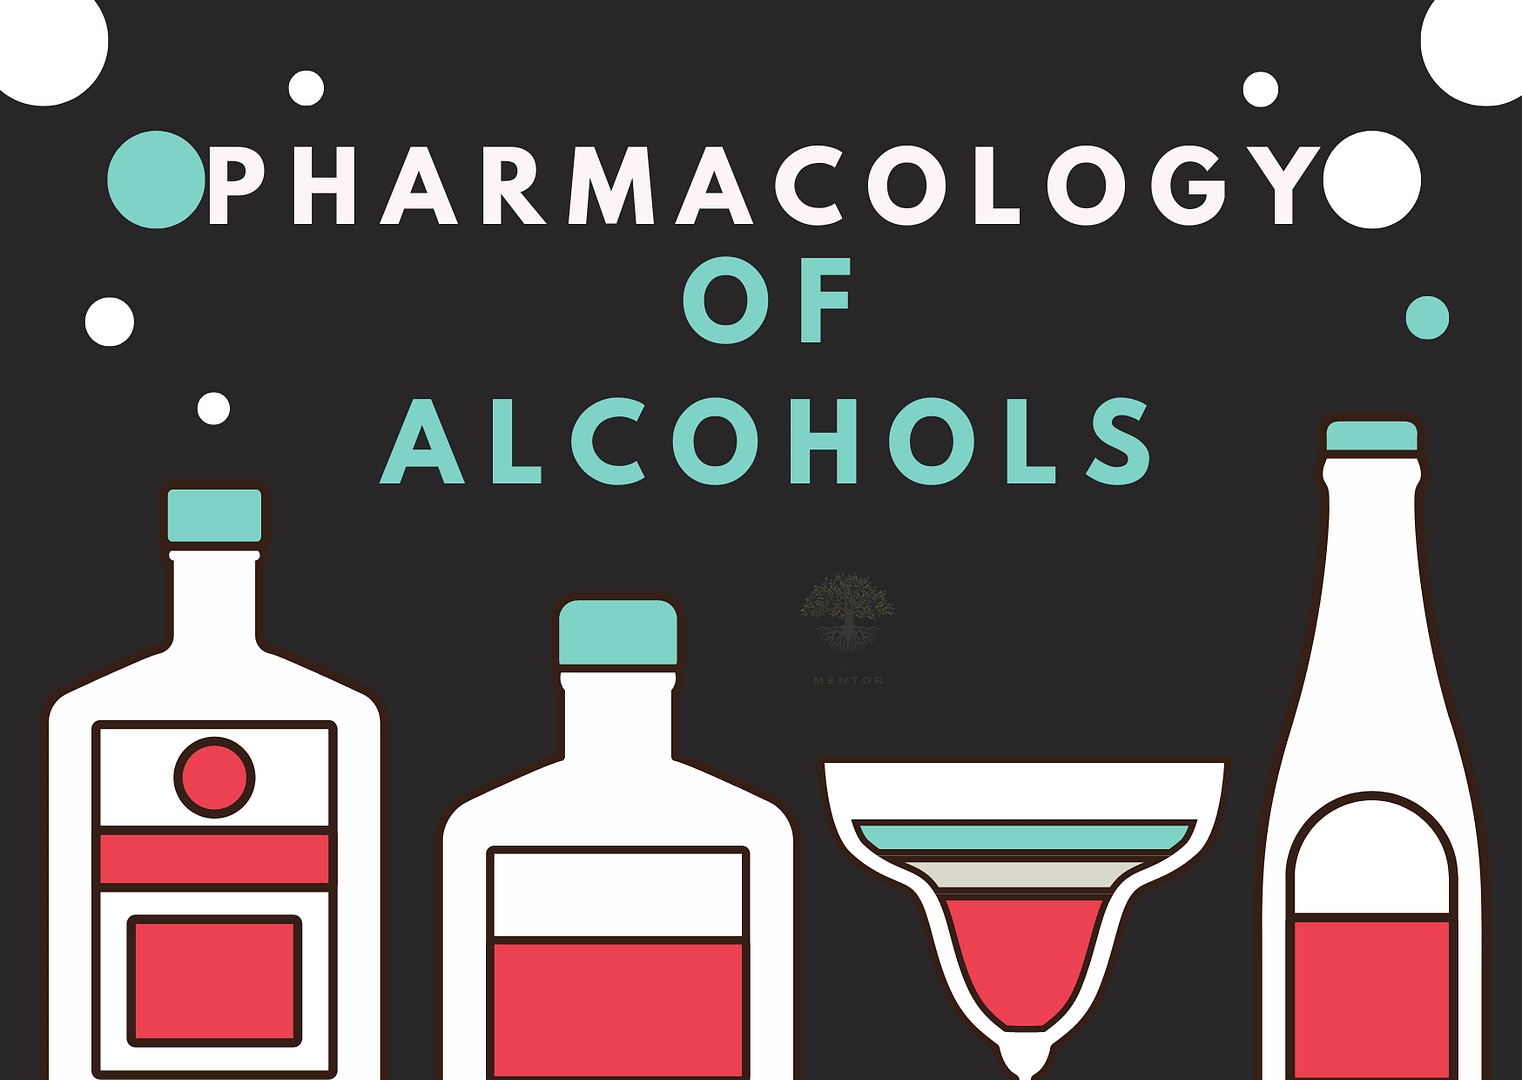 Pharmacology of alcohols